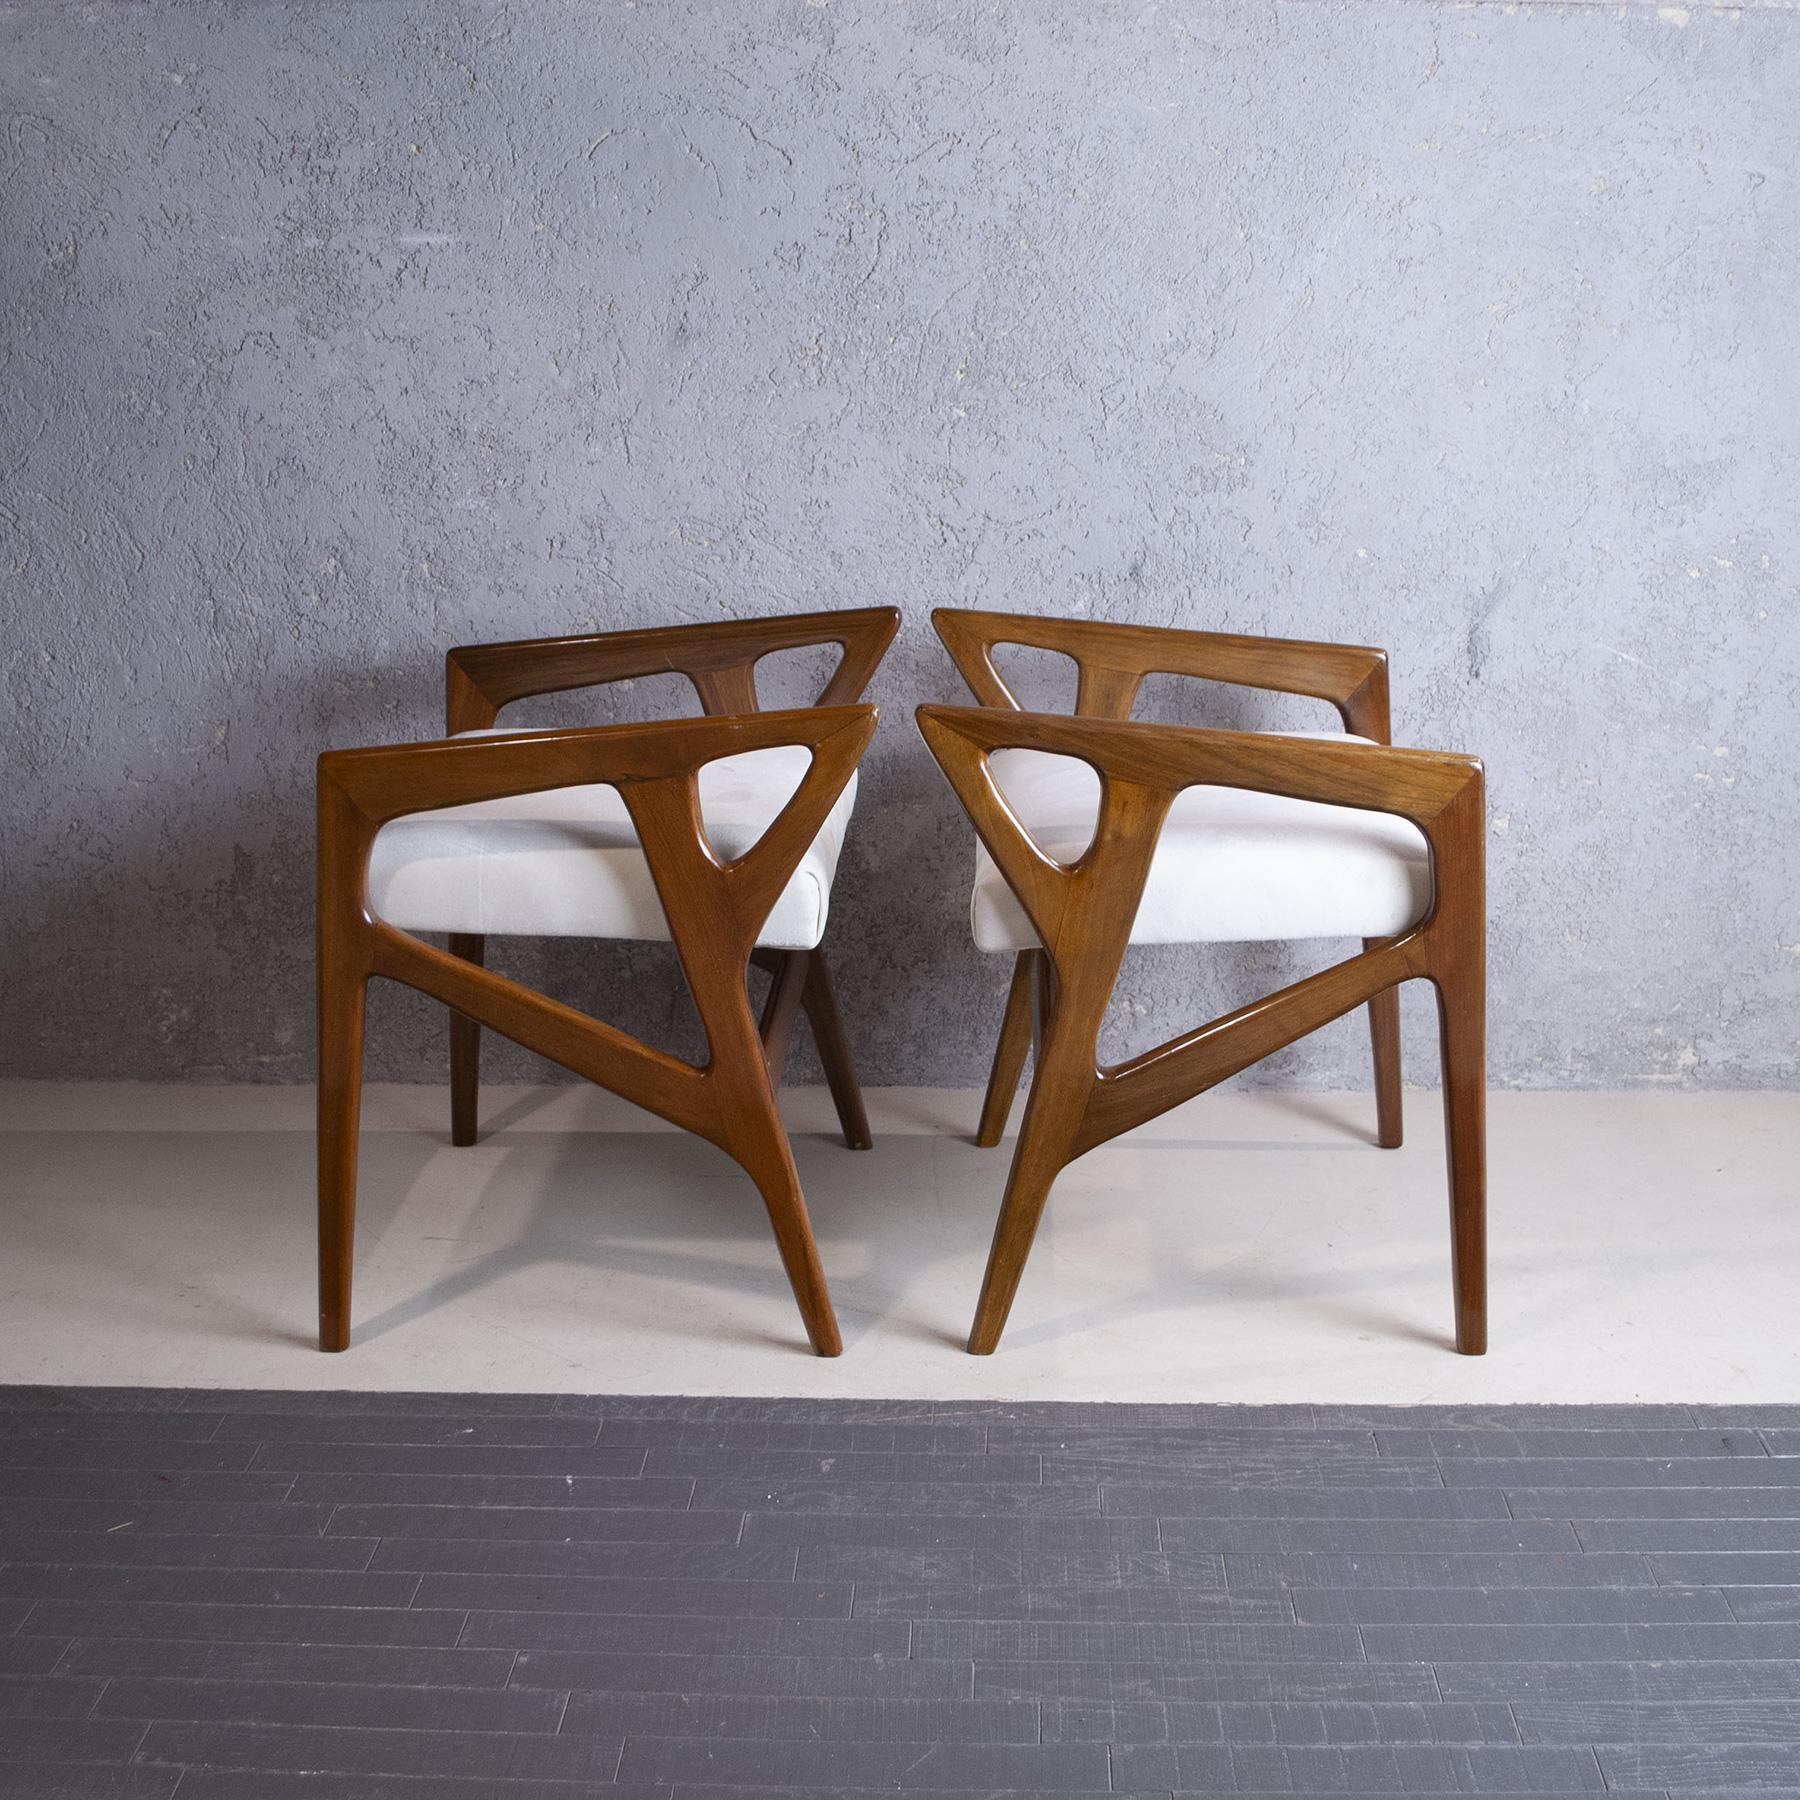 Mid-20th Century Gio Ponti italian midcentury pair of wooden stools 1950s for Cassina